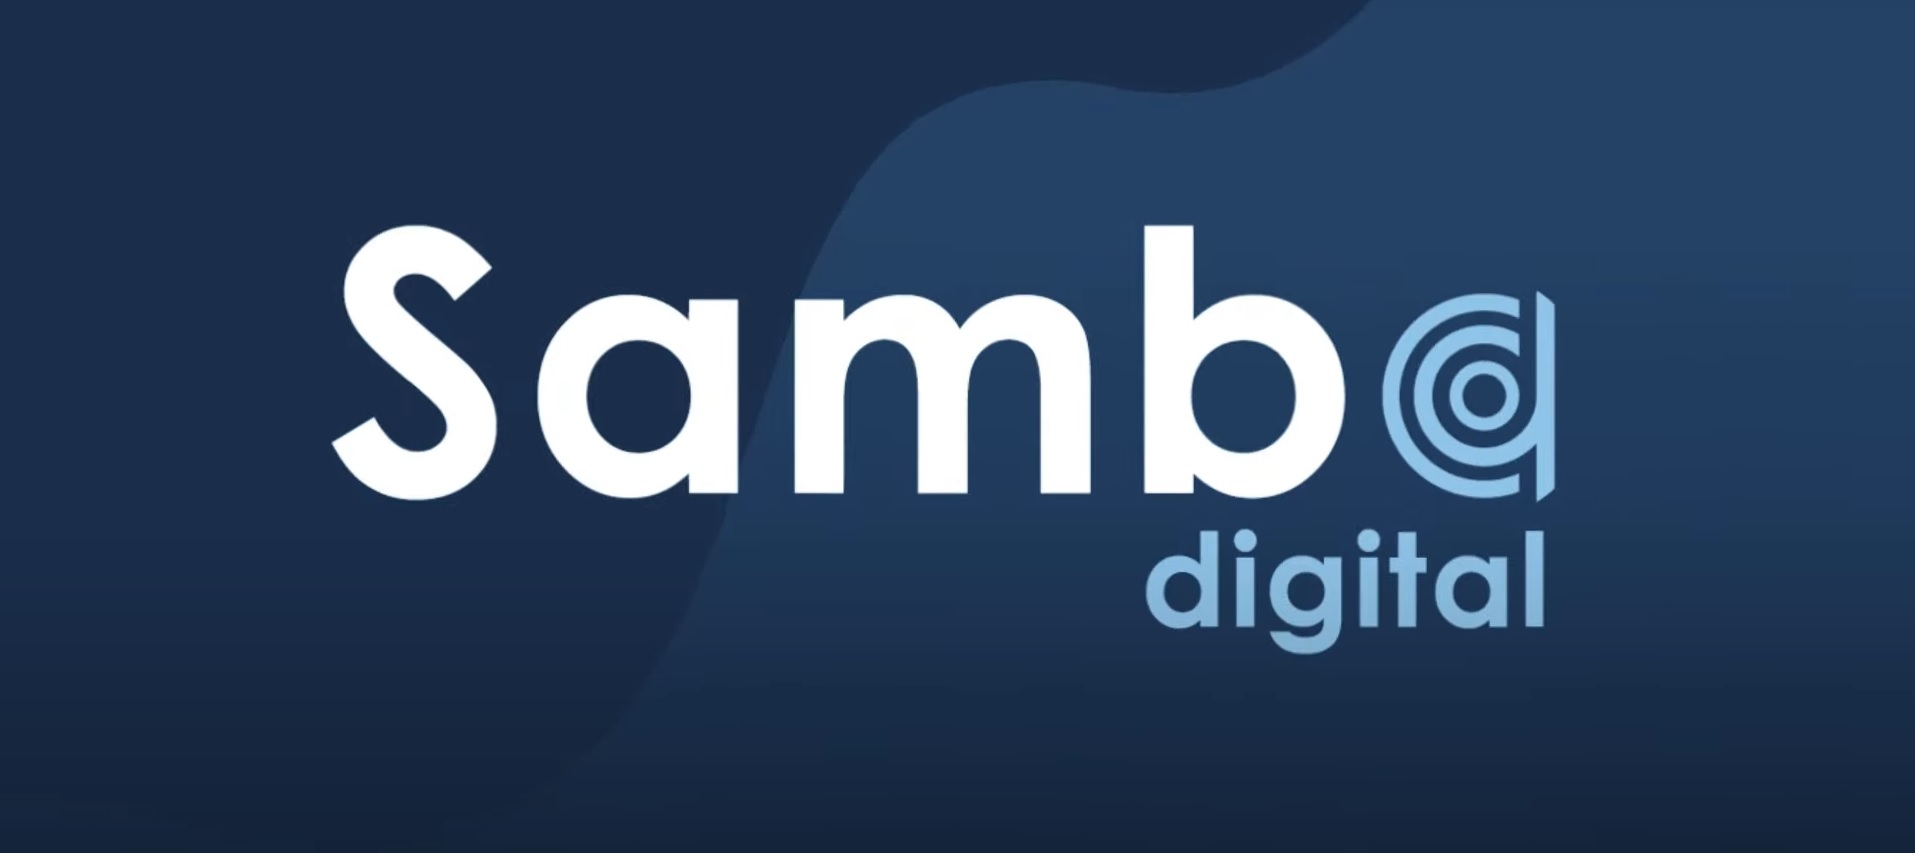 samba digital - campagne